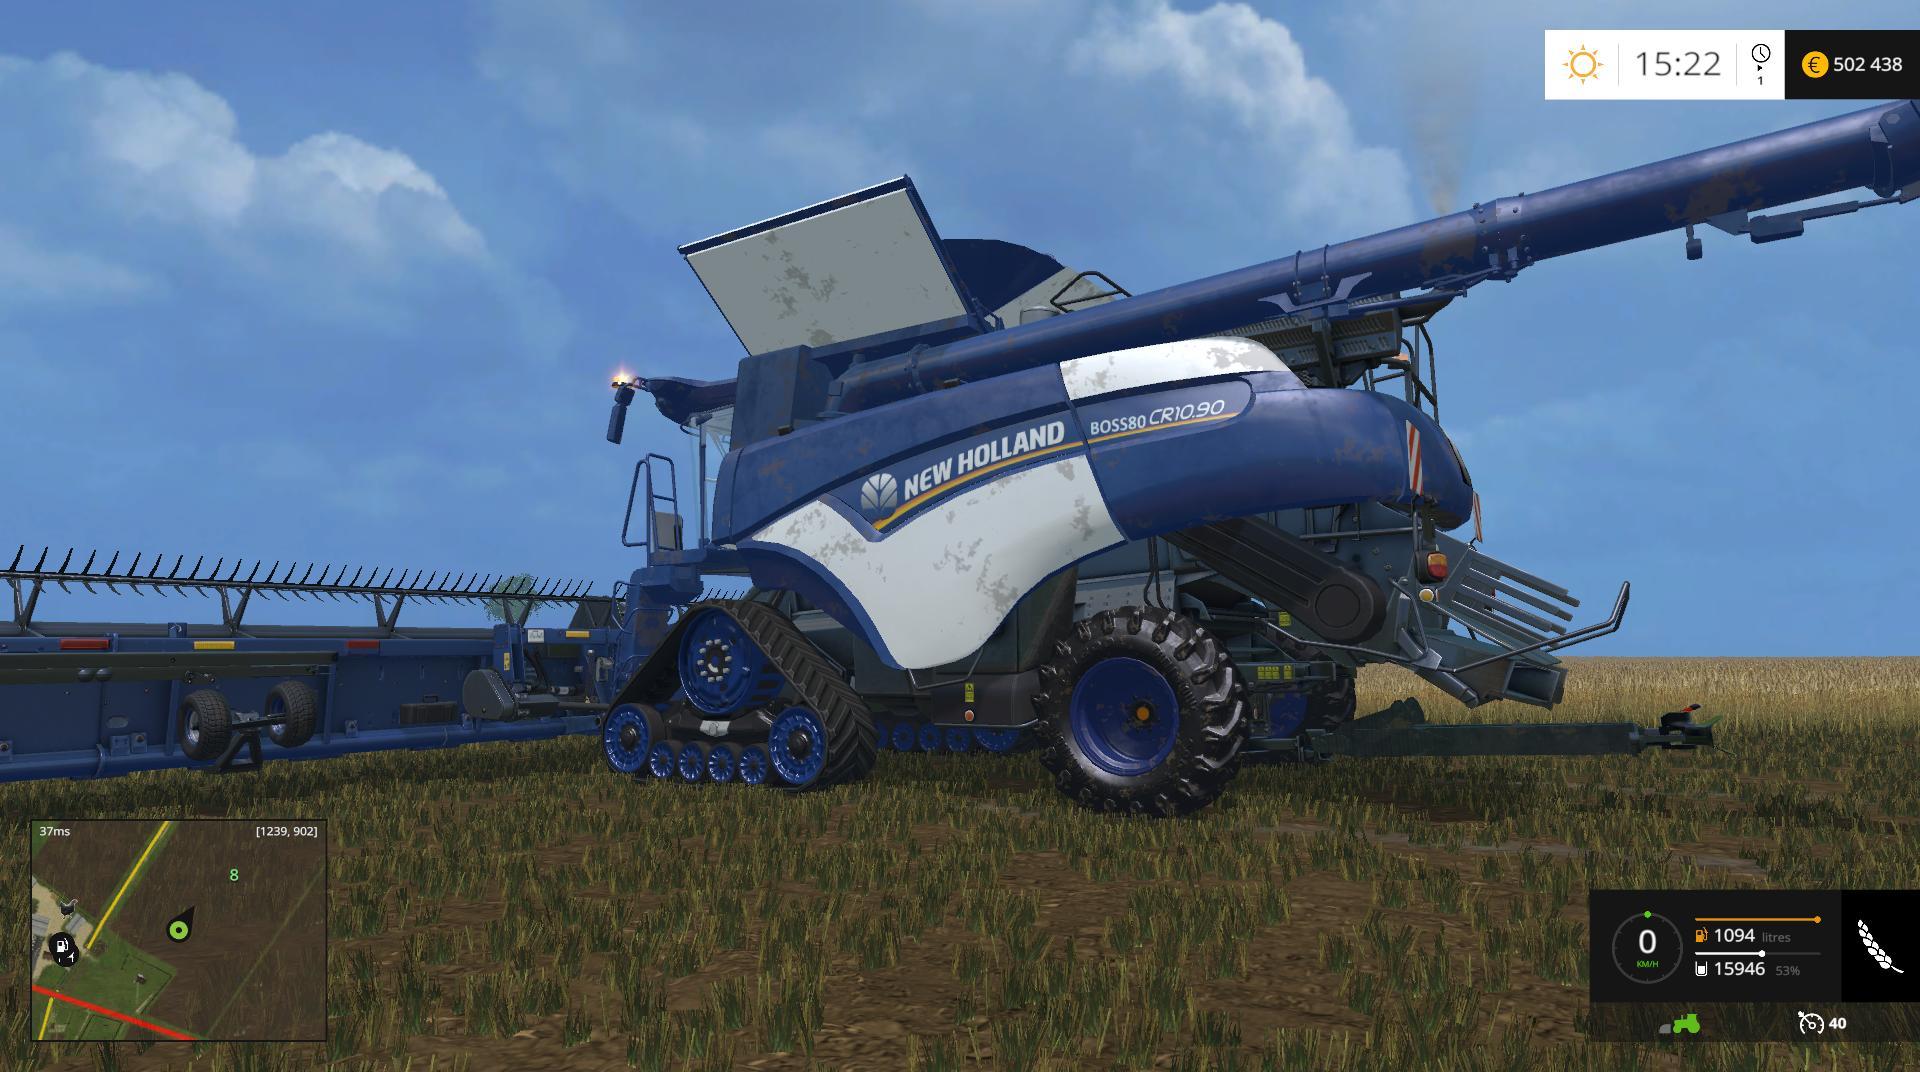 New farming simulator. Комбайн Нью Холланд FS 2015. Нью Холланд 1090 комбайн. Fs15 комбайн. FS 17 New Holland комбайн.